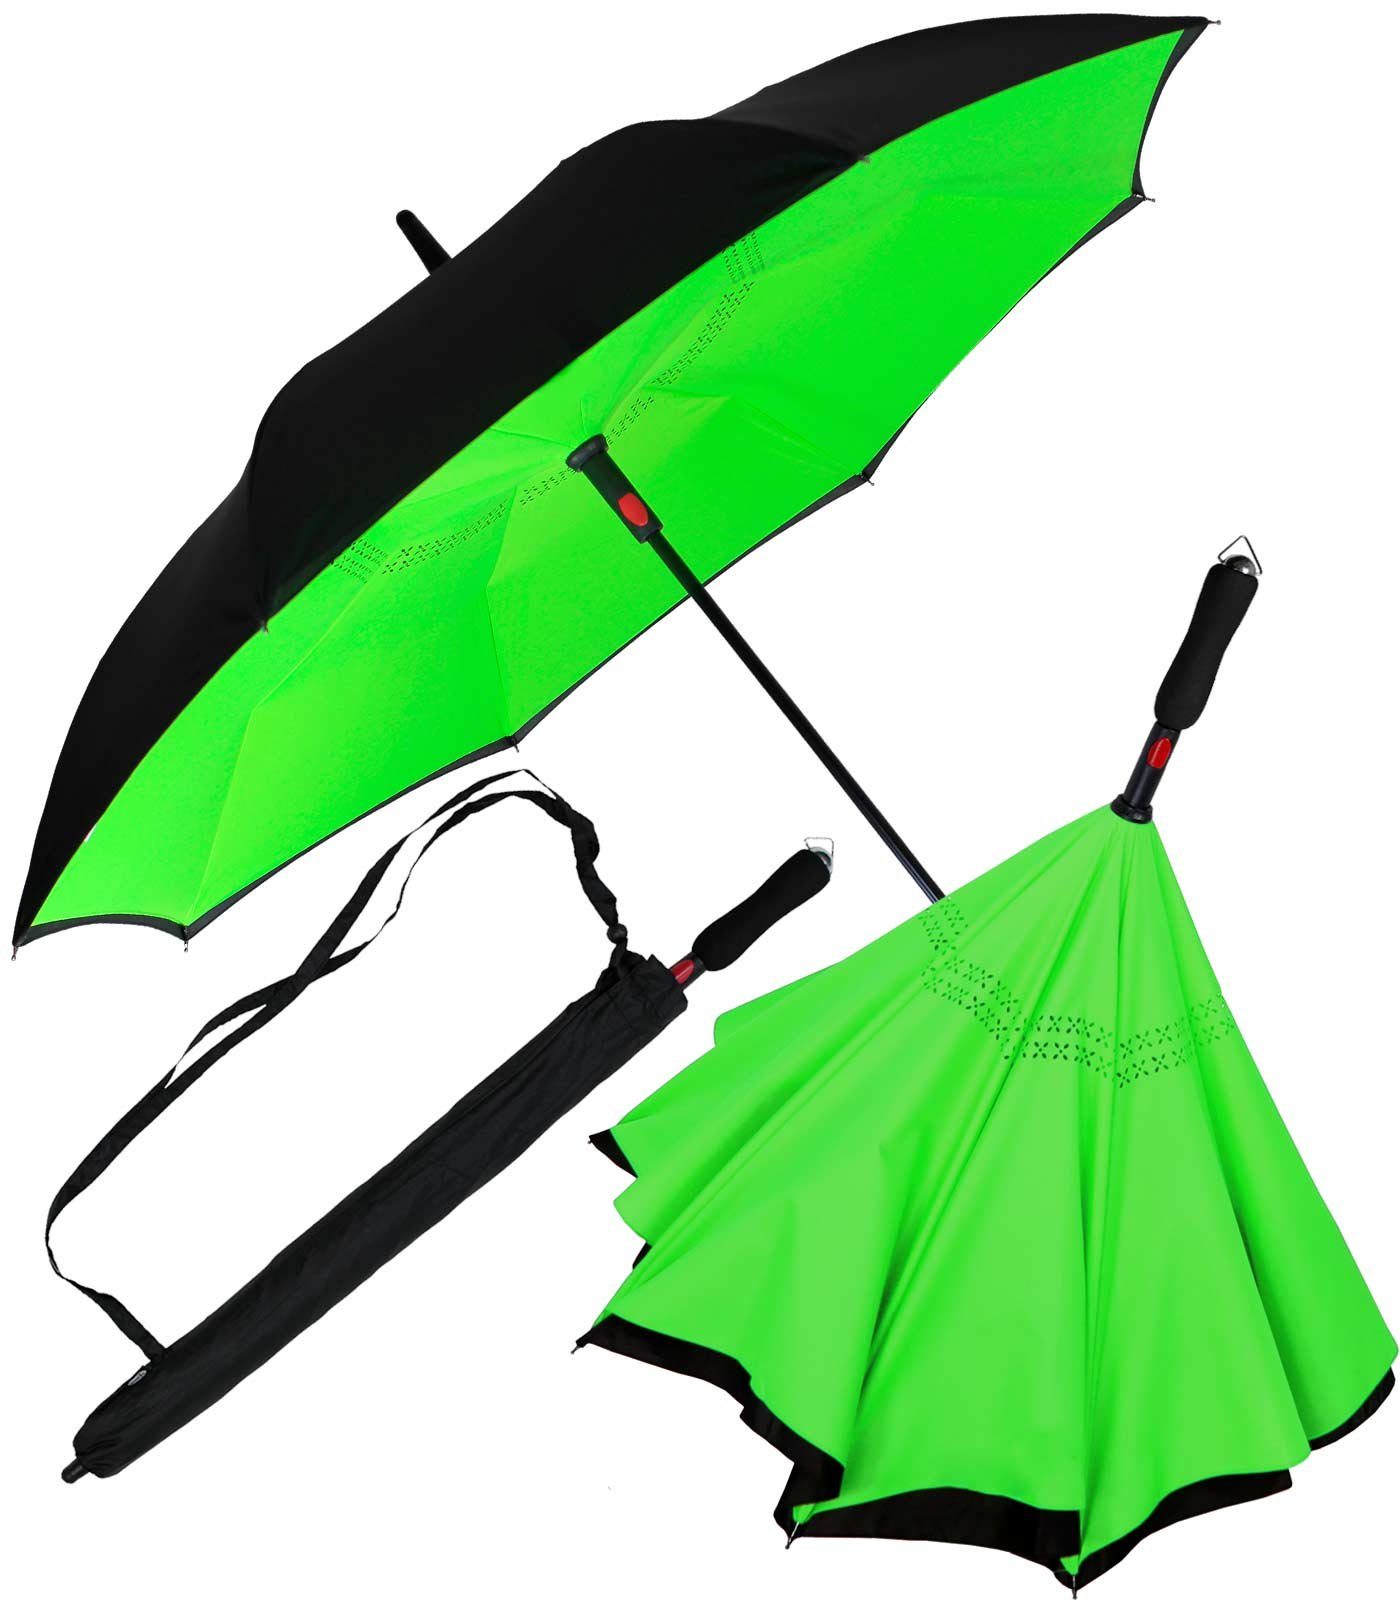 iX-brella Langregenschirm Reverse-Schirm - umgedreht zu öffnen mit Automatik, umgedreht schwarz-neon-grün